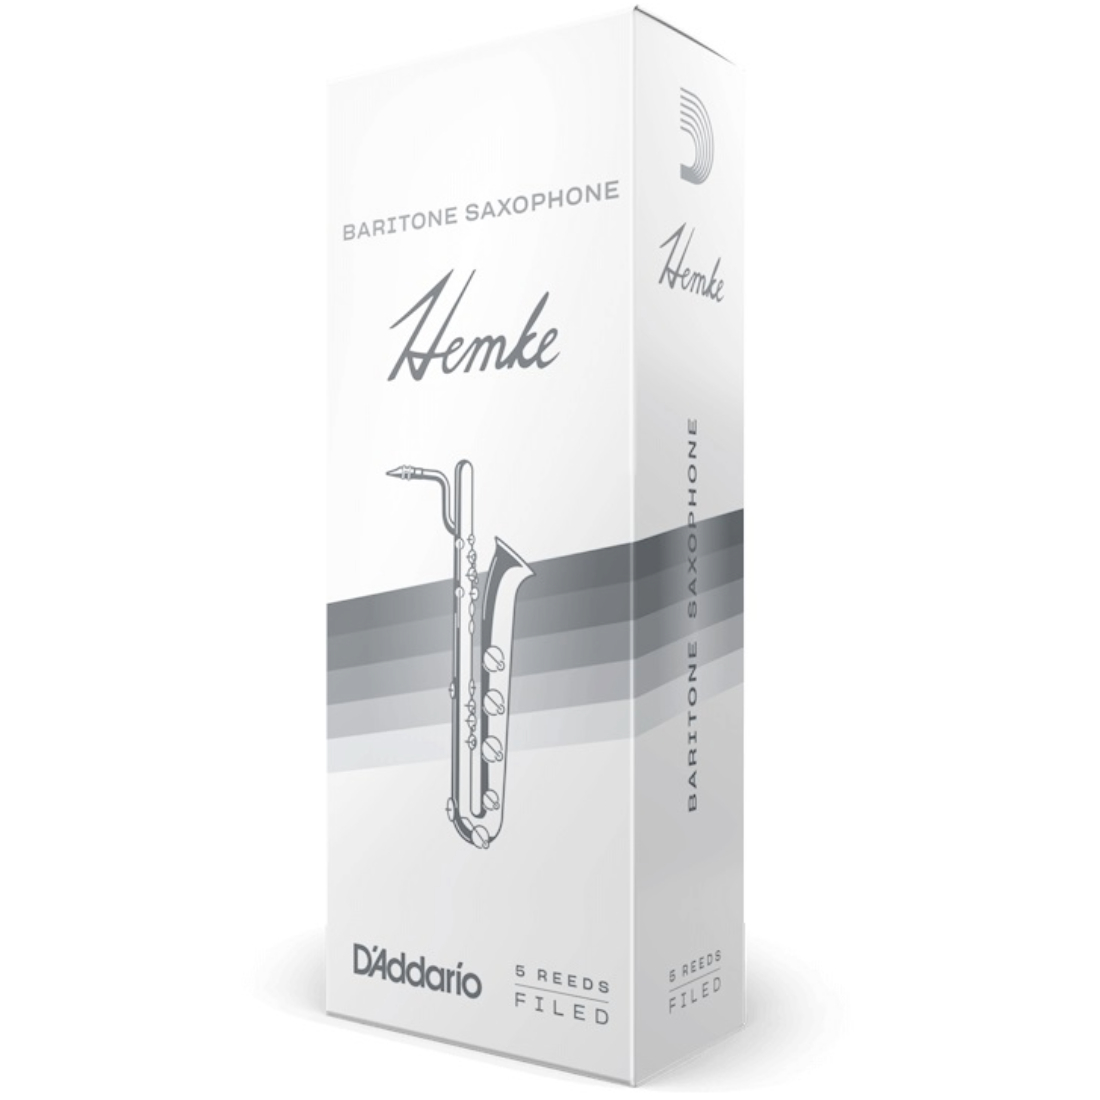 White and grey box of 5 Hemke baritone saxophone reeds - strength of 3